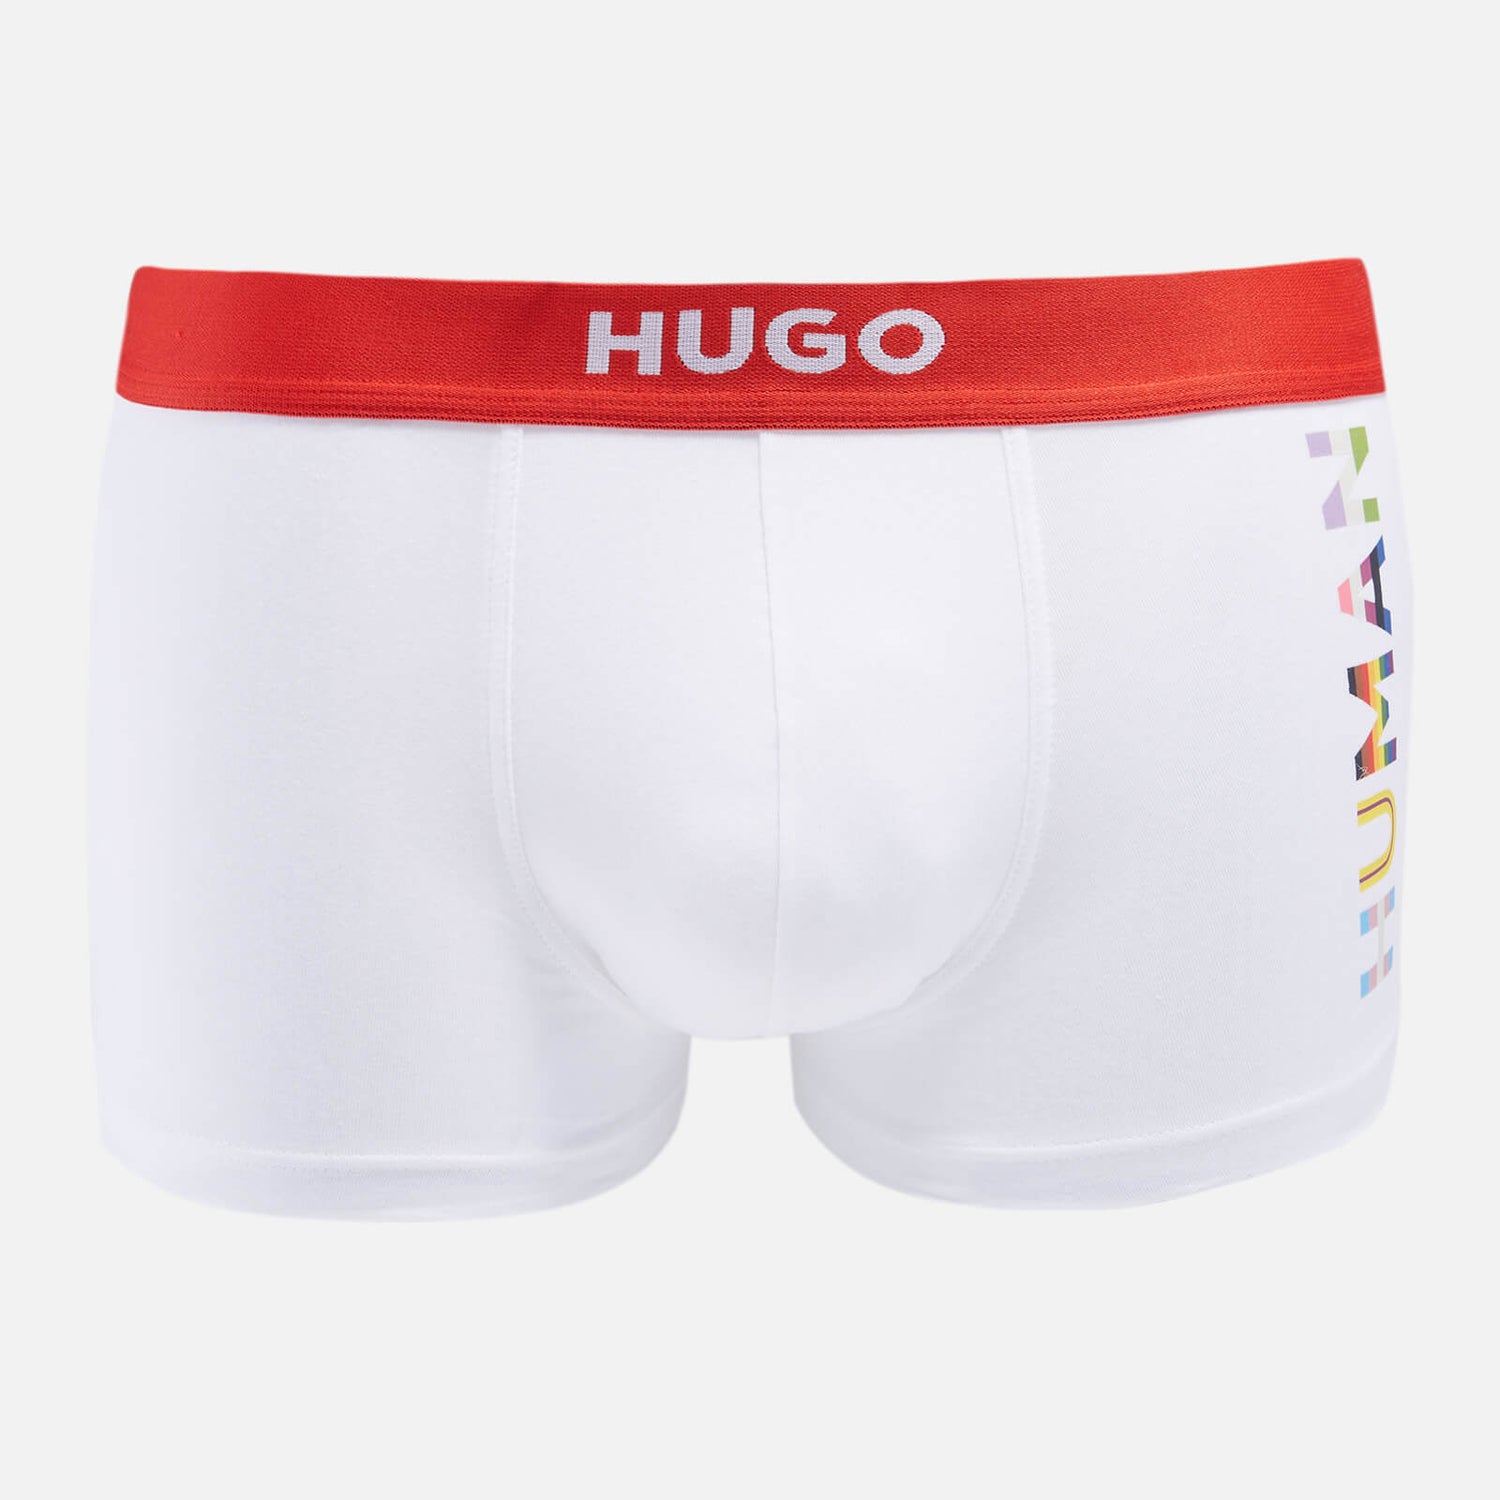 HUGO Bodywear Men's Pride Trunks - White - M